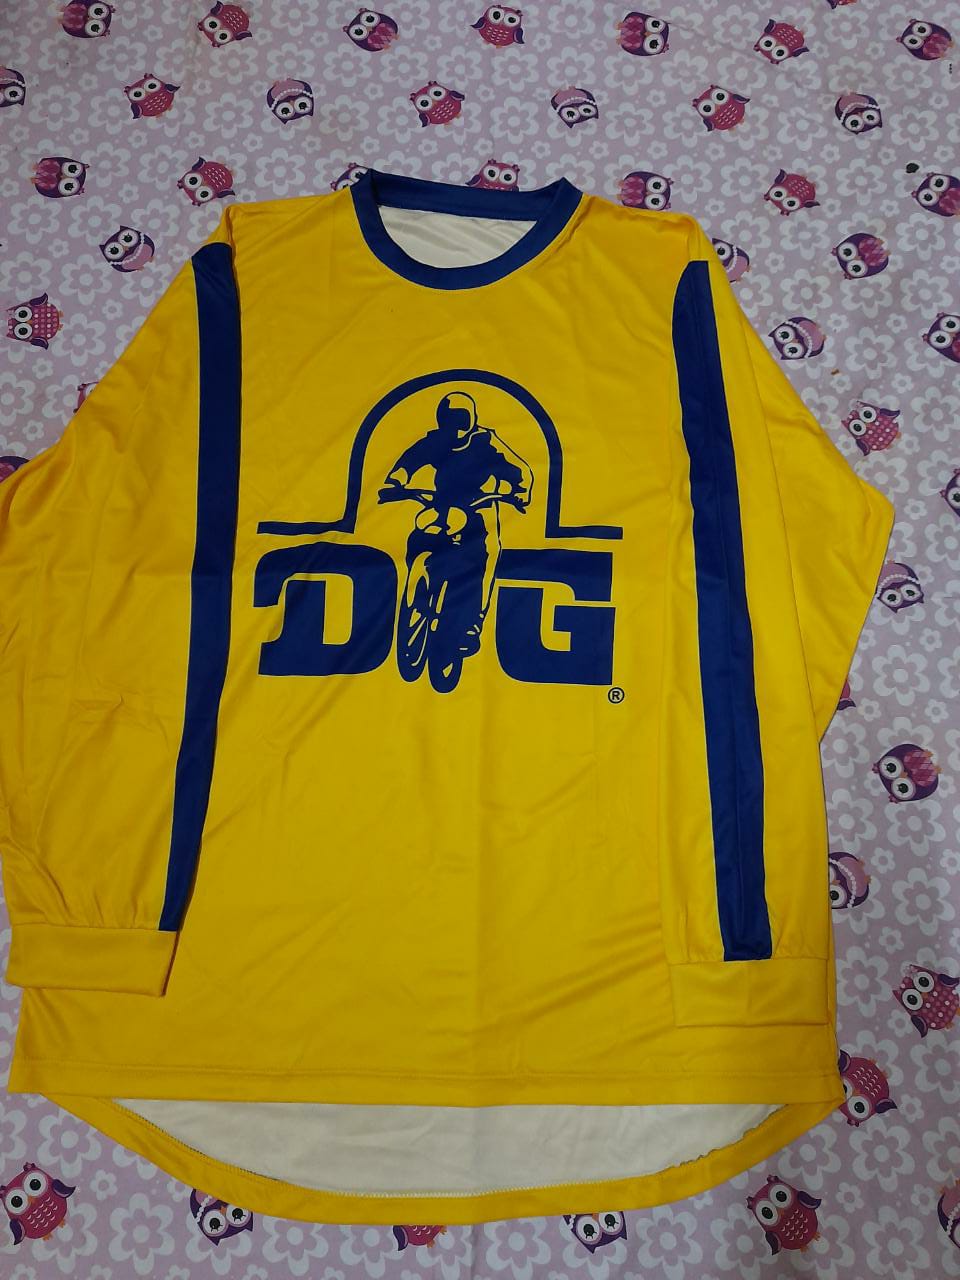 DG Racing Vintage Bmx Jersey